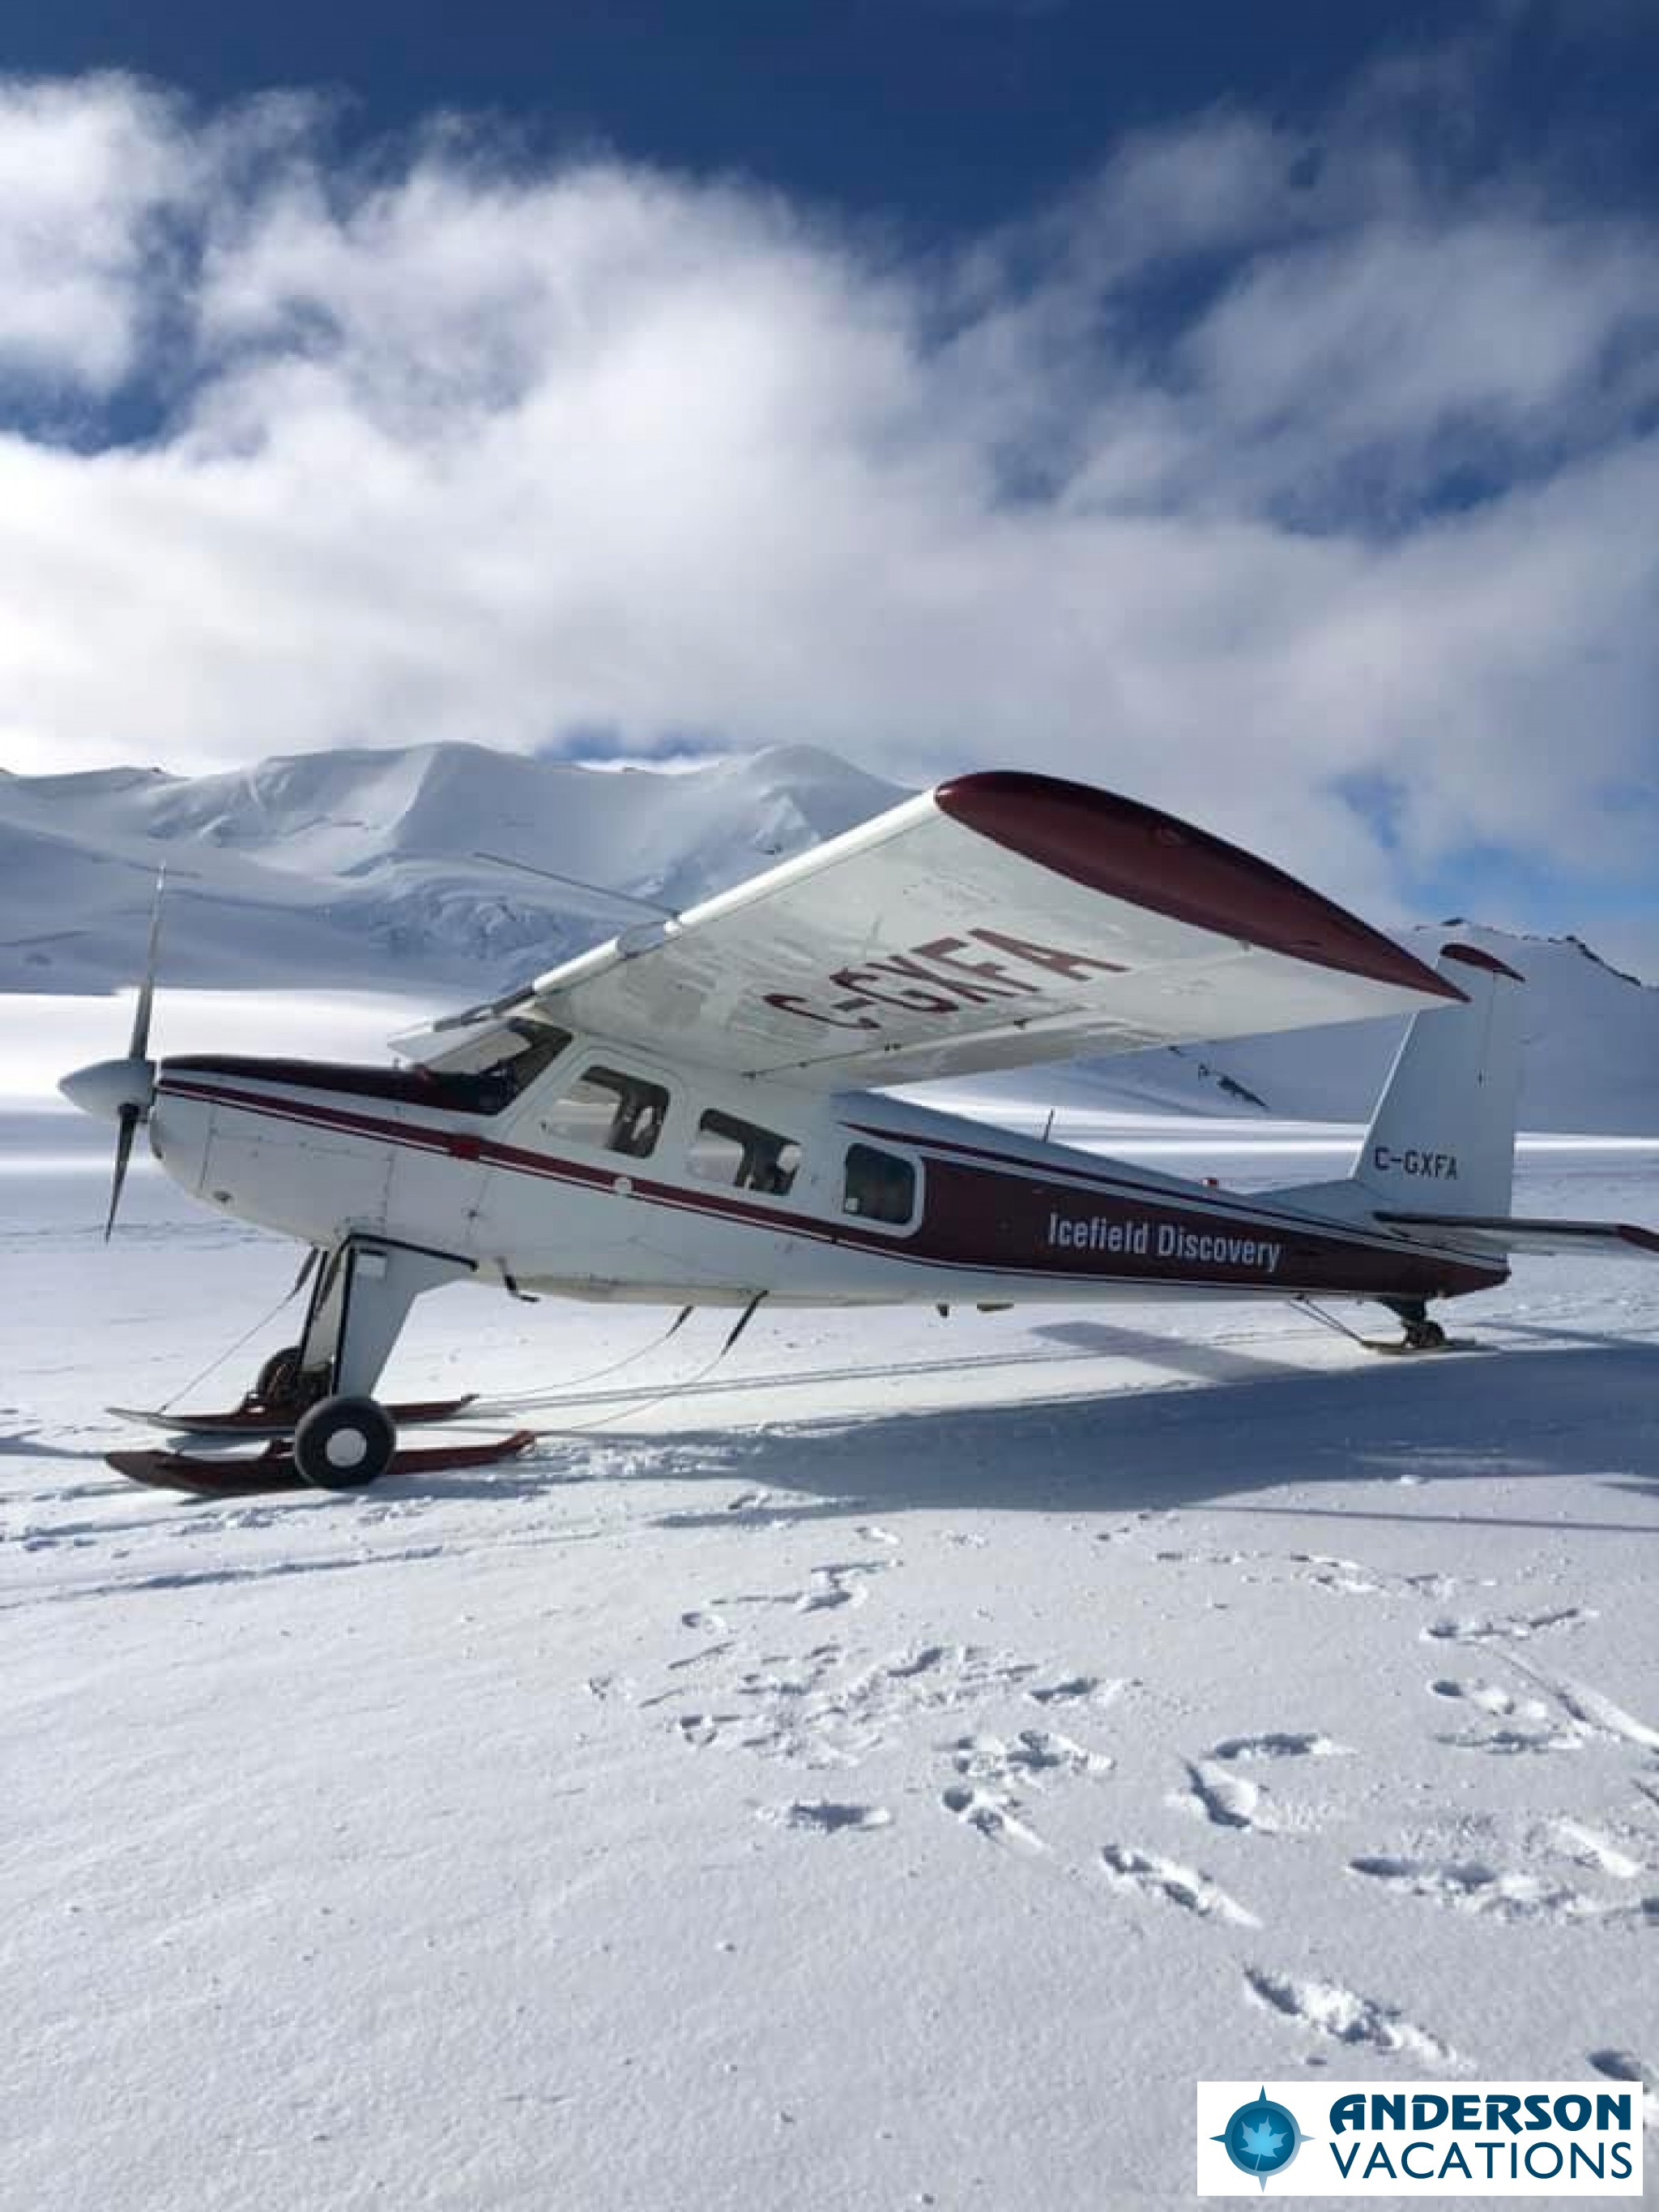 Flightseeing on a glacier